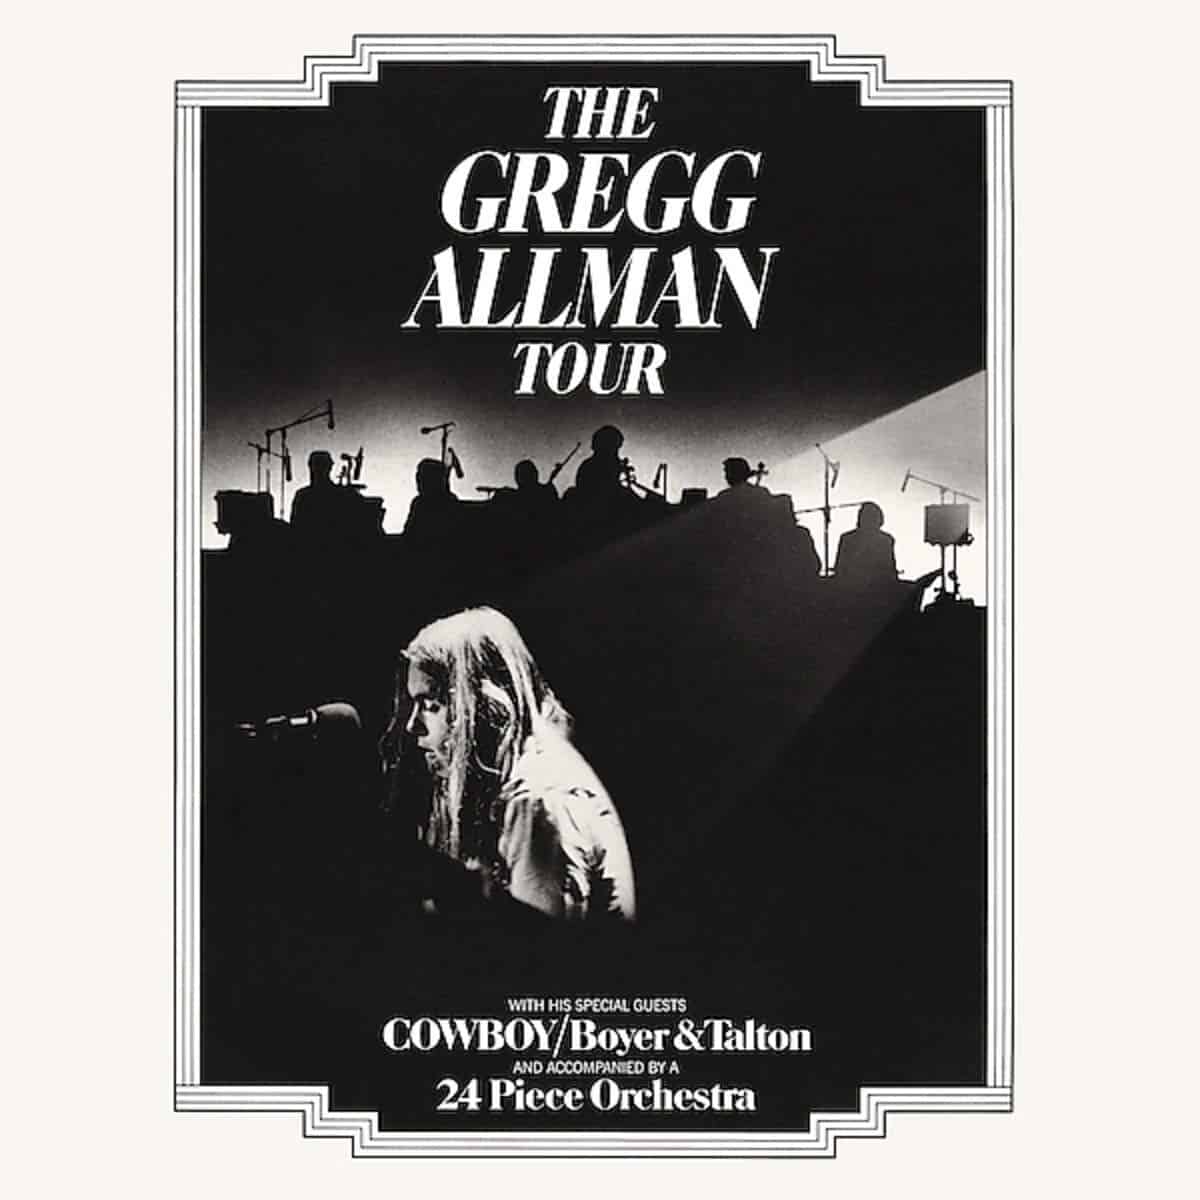 The-Gregg-Allman-Tour-Vinyl-Record-Album-front